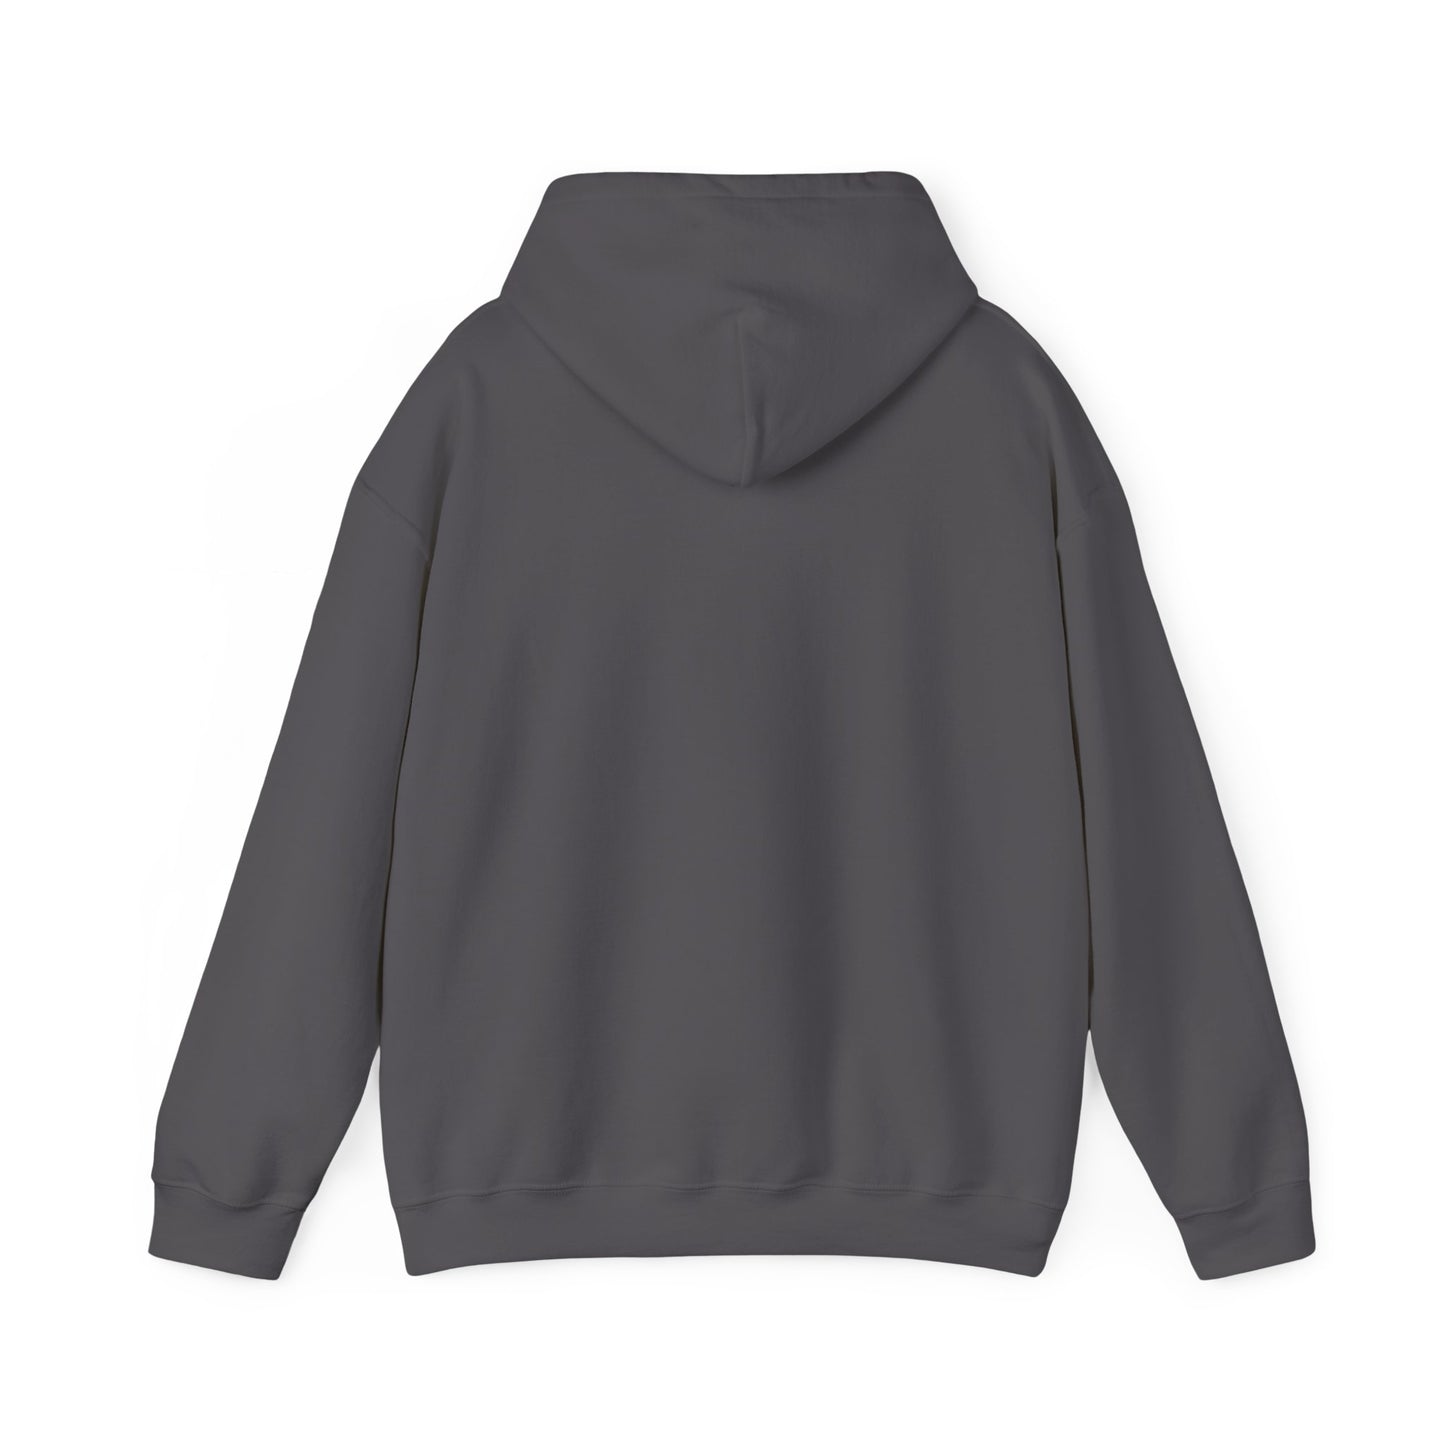 Greyhound Air Hooded Sweatshirt, Classic Fit, Original Design, Unisex